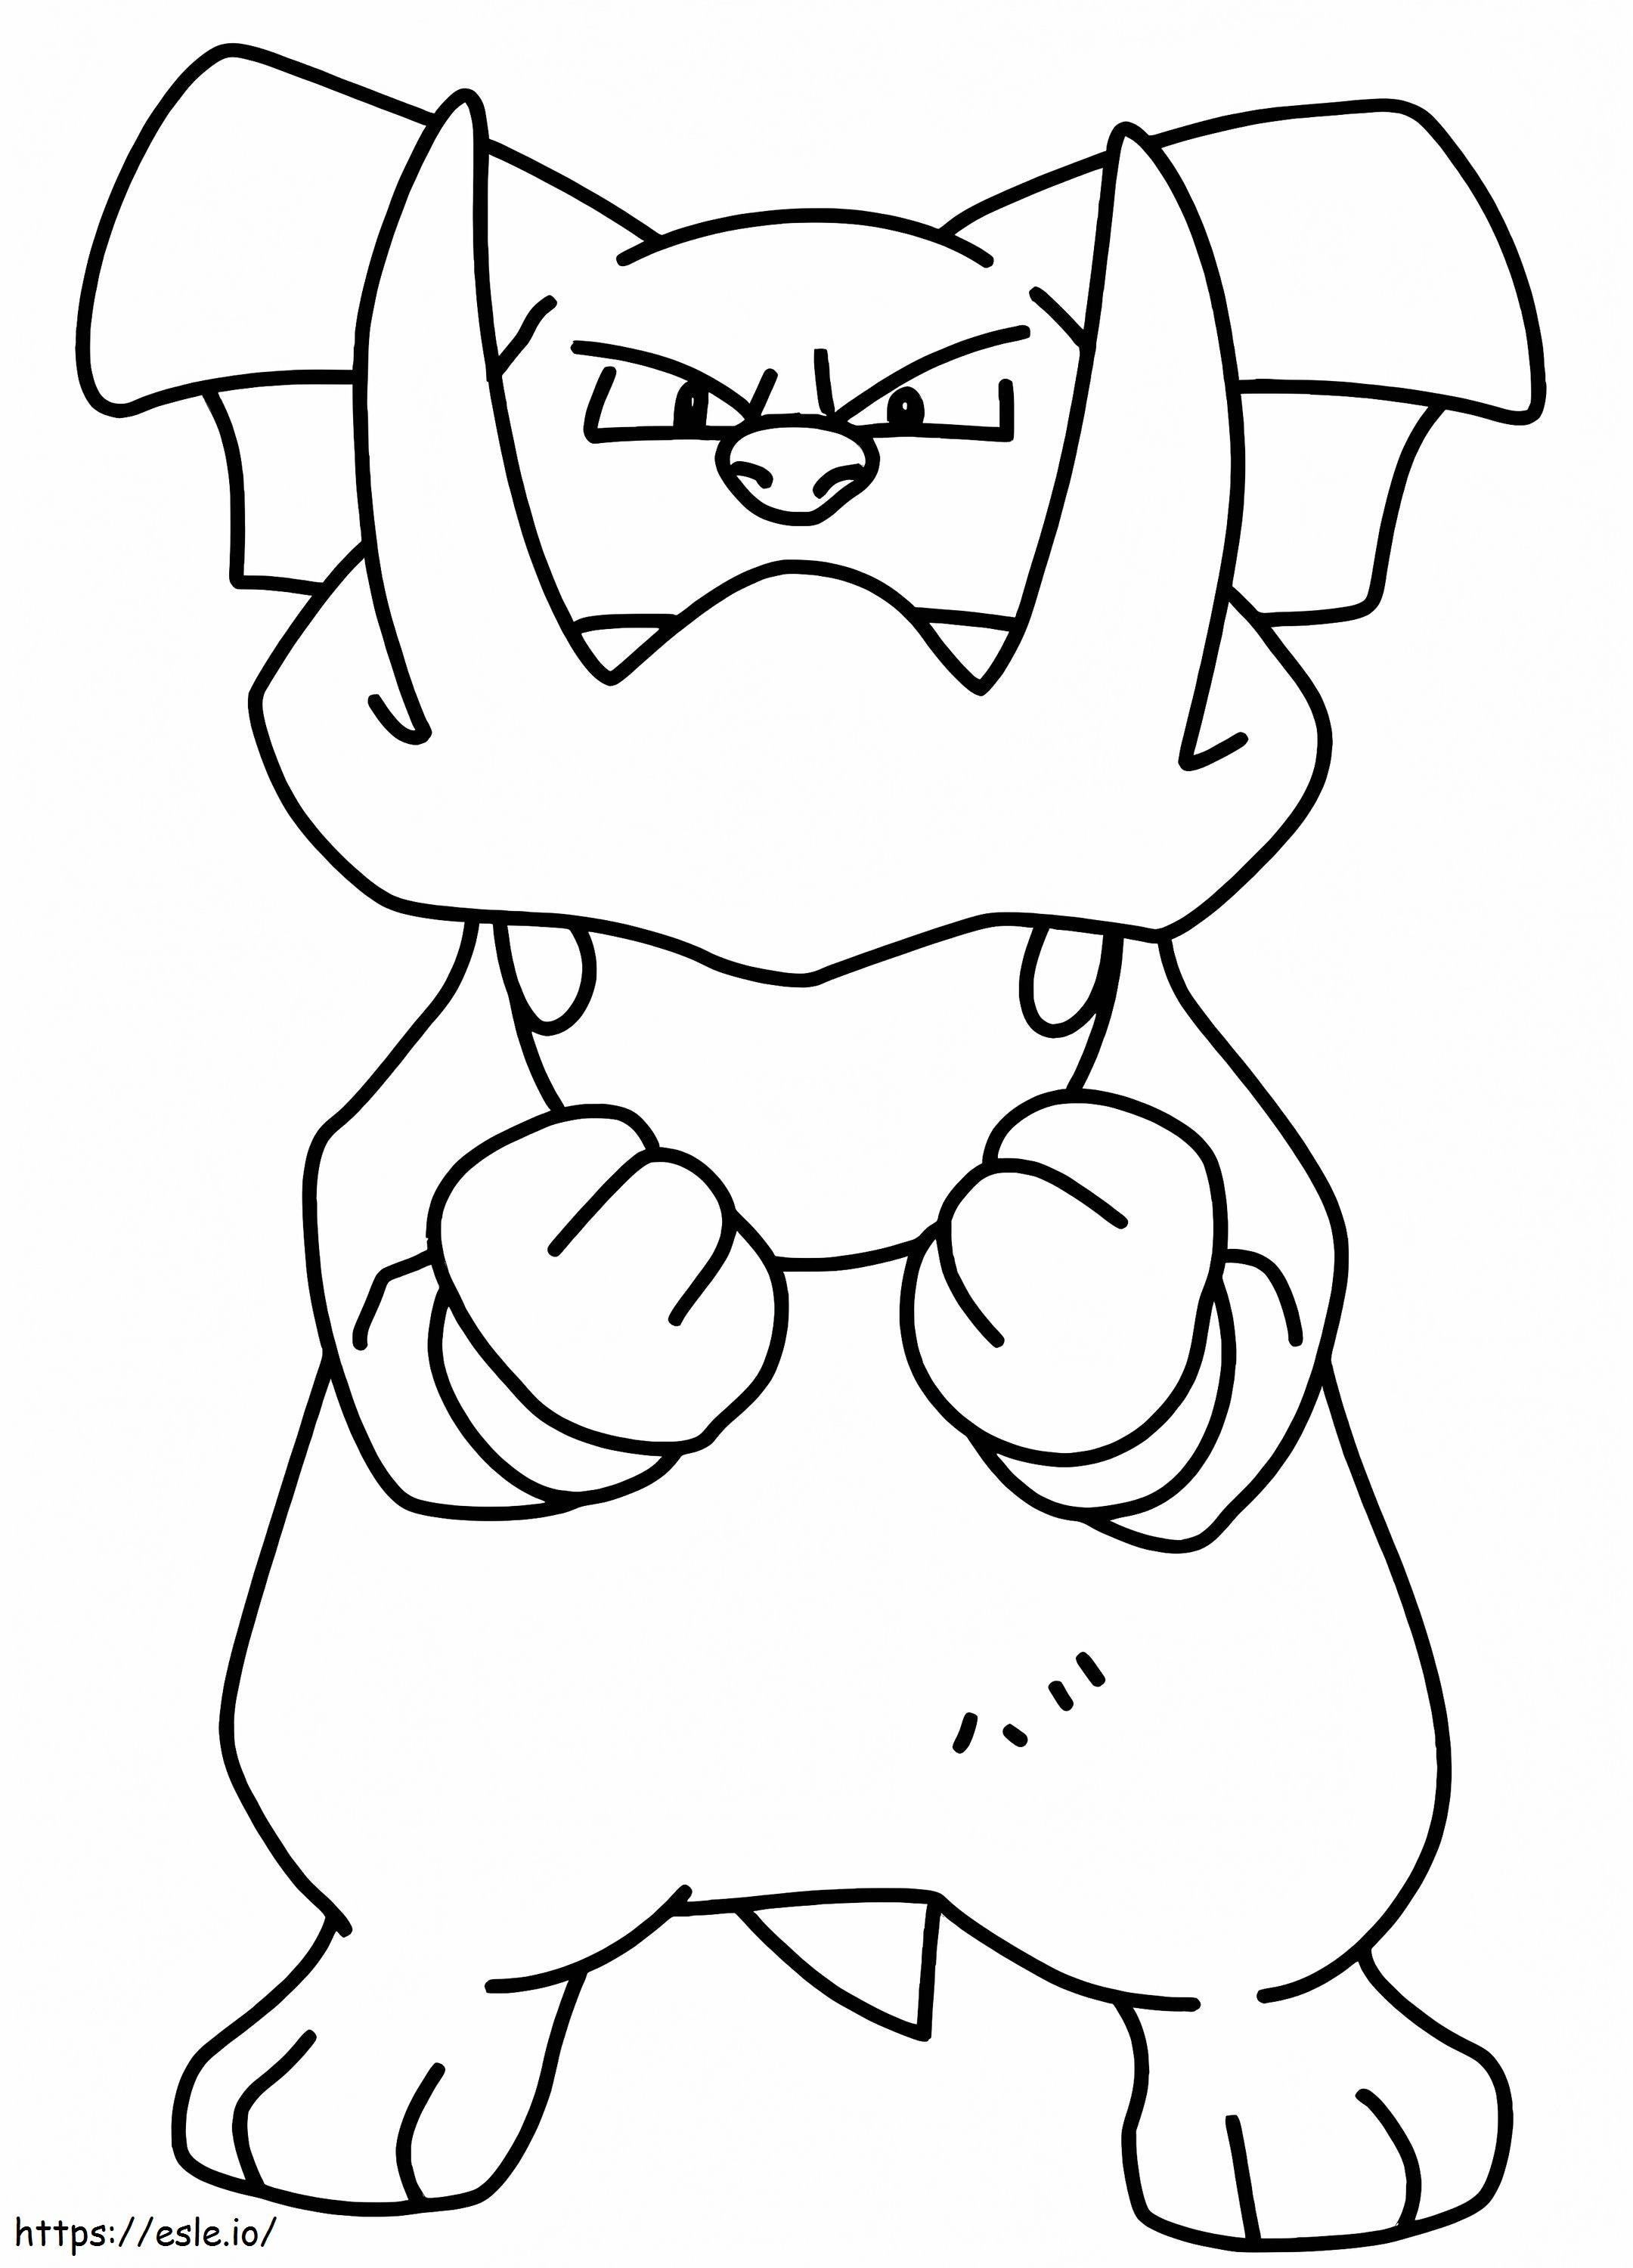 Granbull in Pokémon kleurplaat kleurplaat